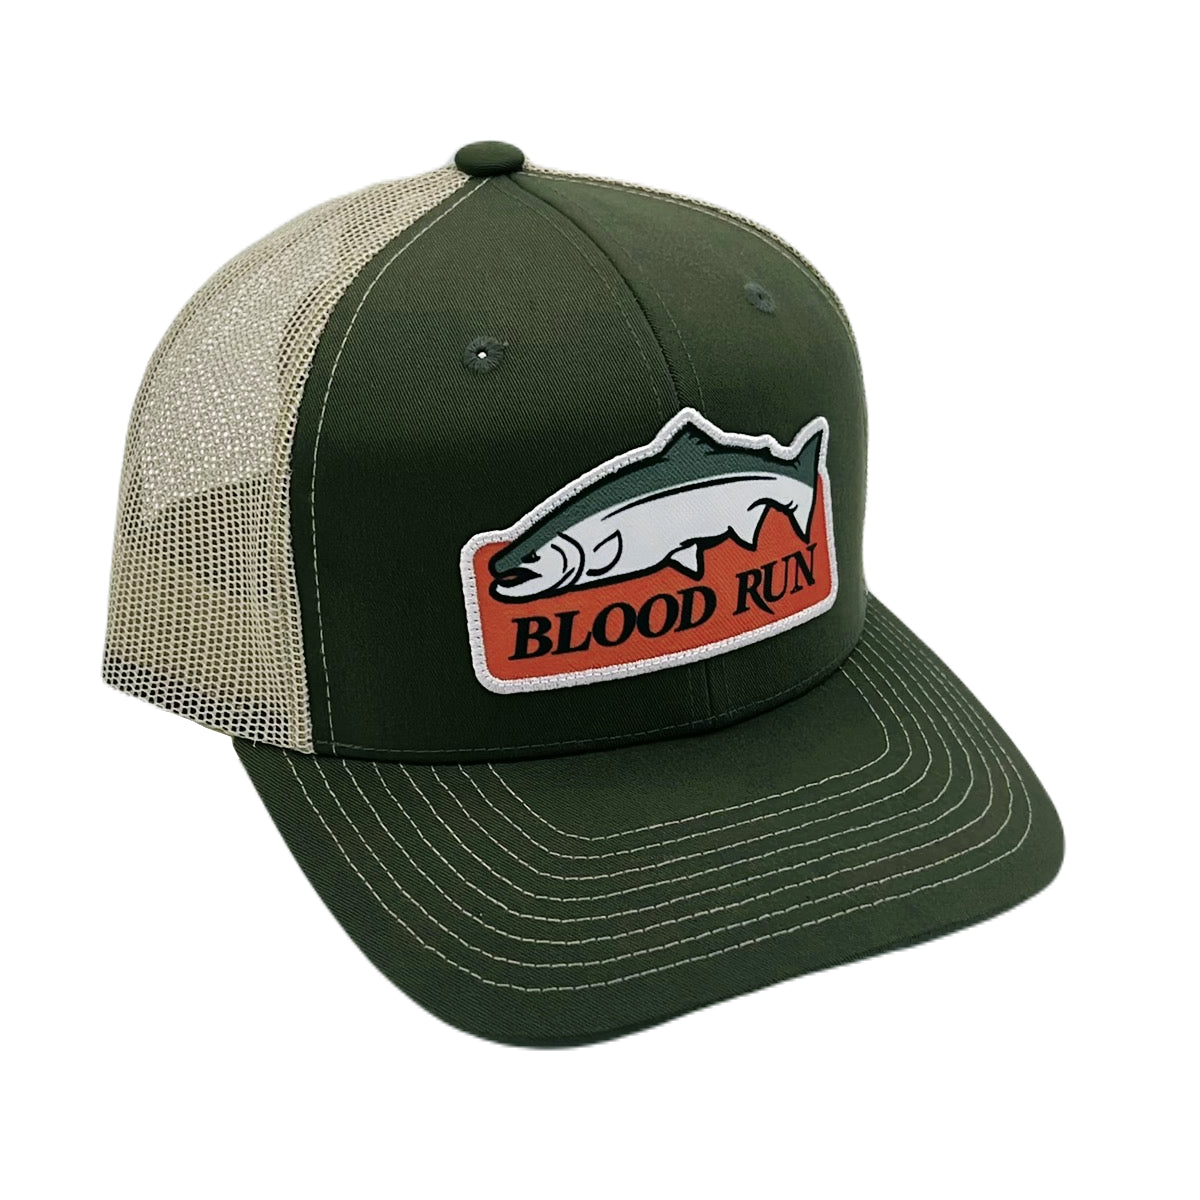 Avid Fishing Gear Fish Hook Trucker Hat Cap Orange Gray Mesh